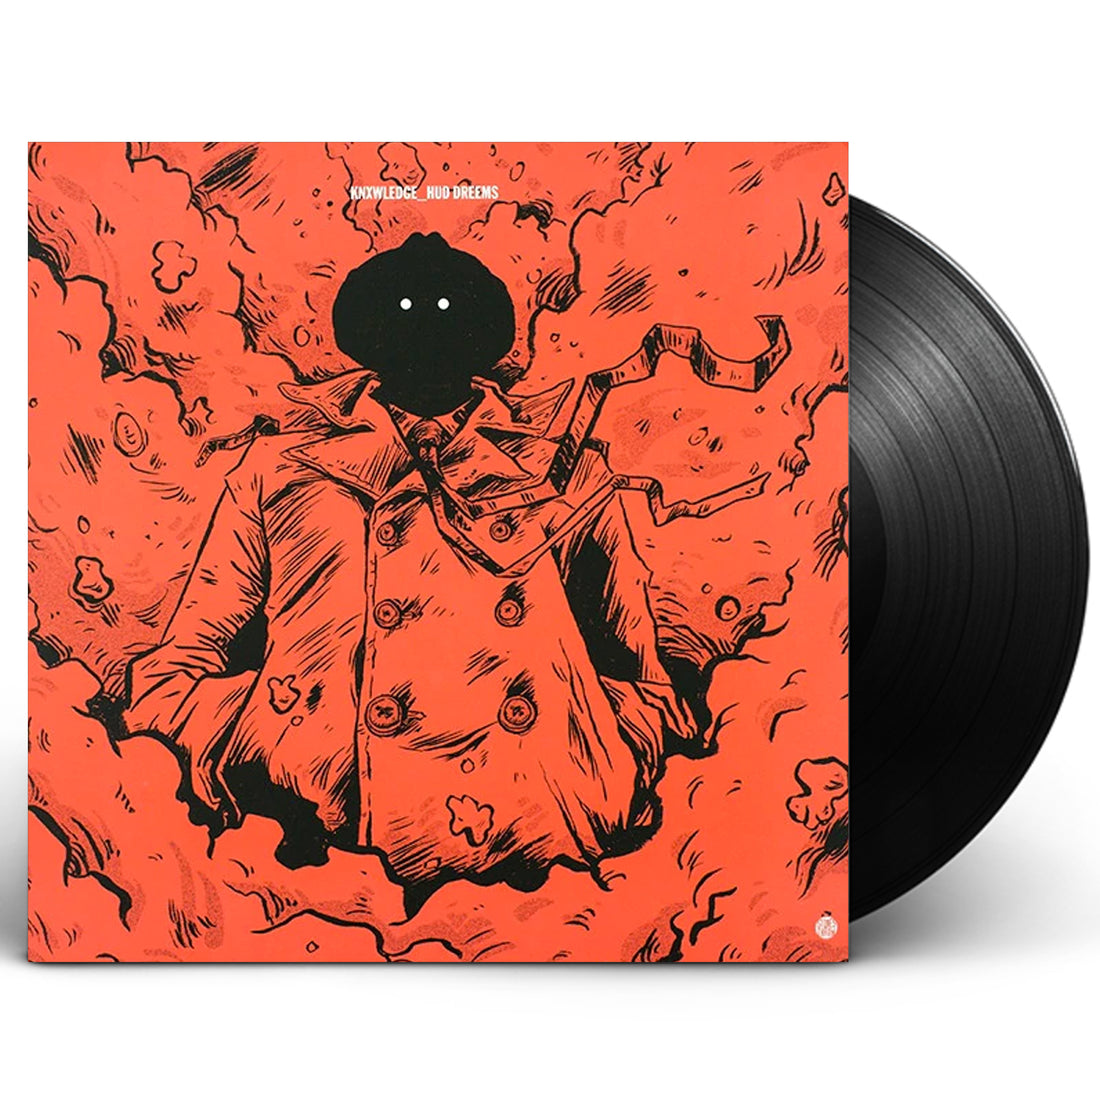 Knxwledge "Hud Dreems" 2xLP Vinyl